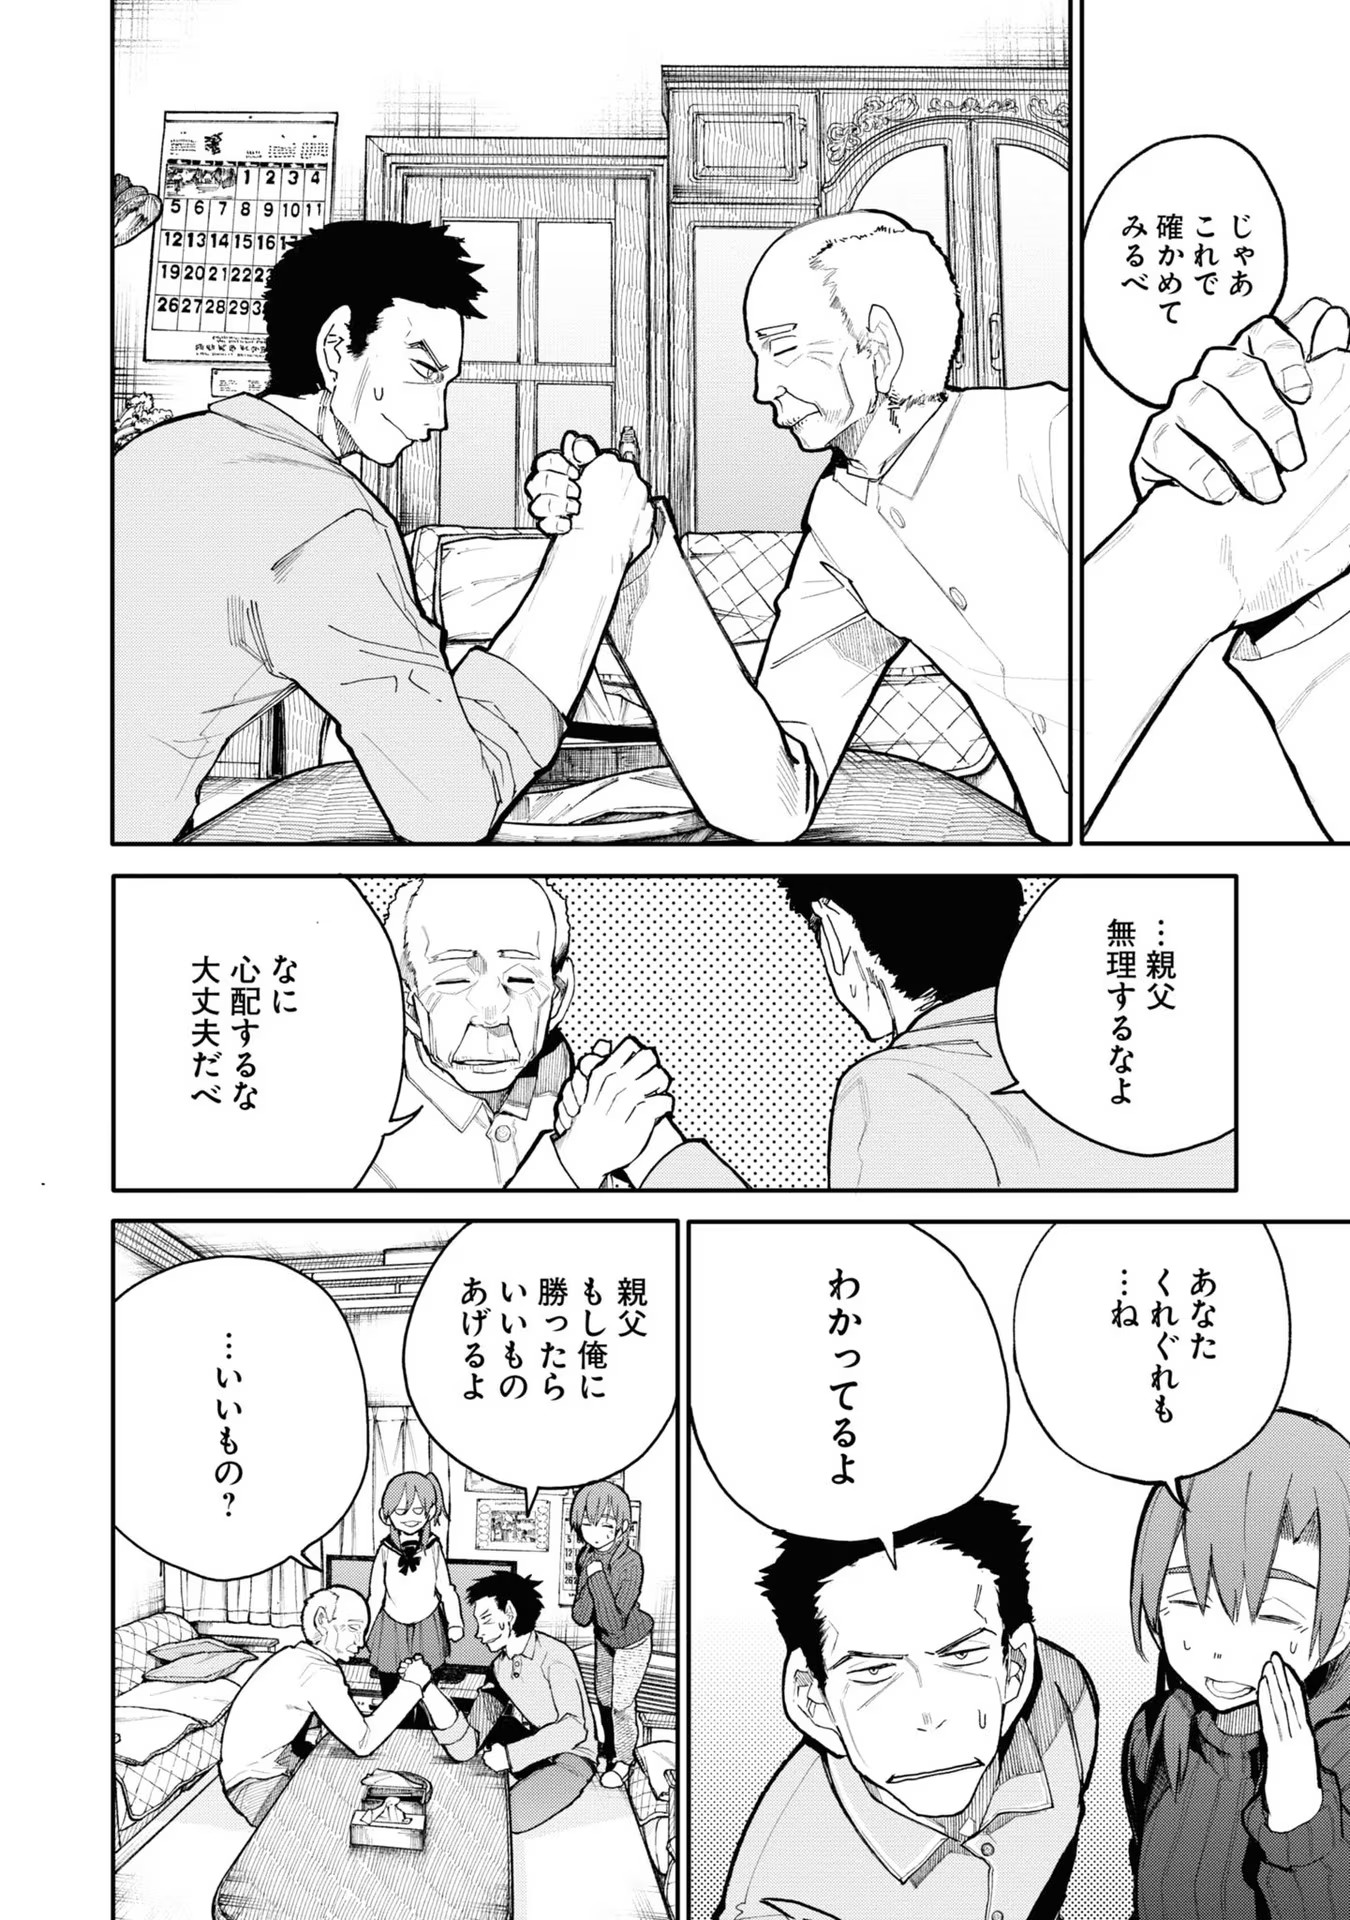 Ojii-san to Obaa-san ga Wakigaetta Hanashi - Chapter 50 - Page 2